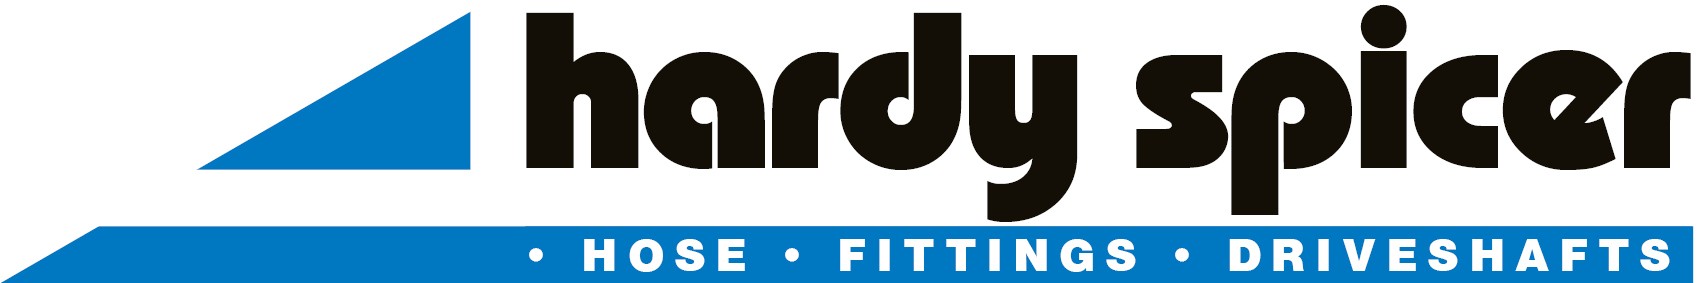 Hardy-Spicer-logo-2009